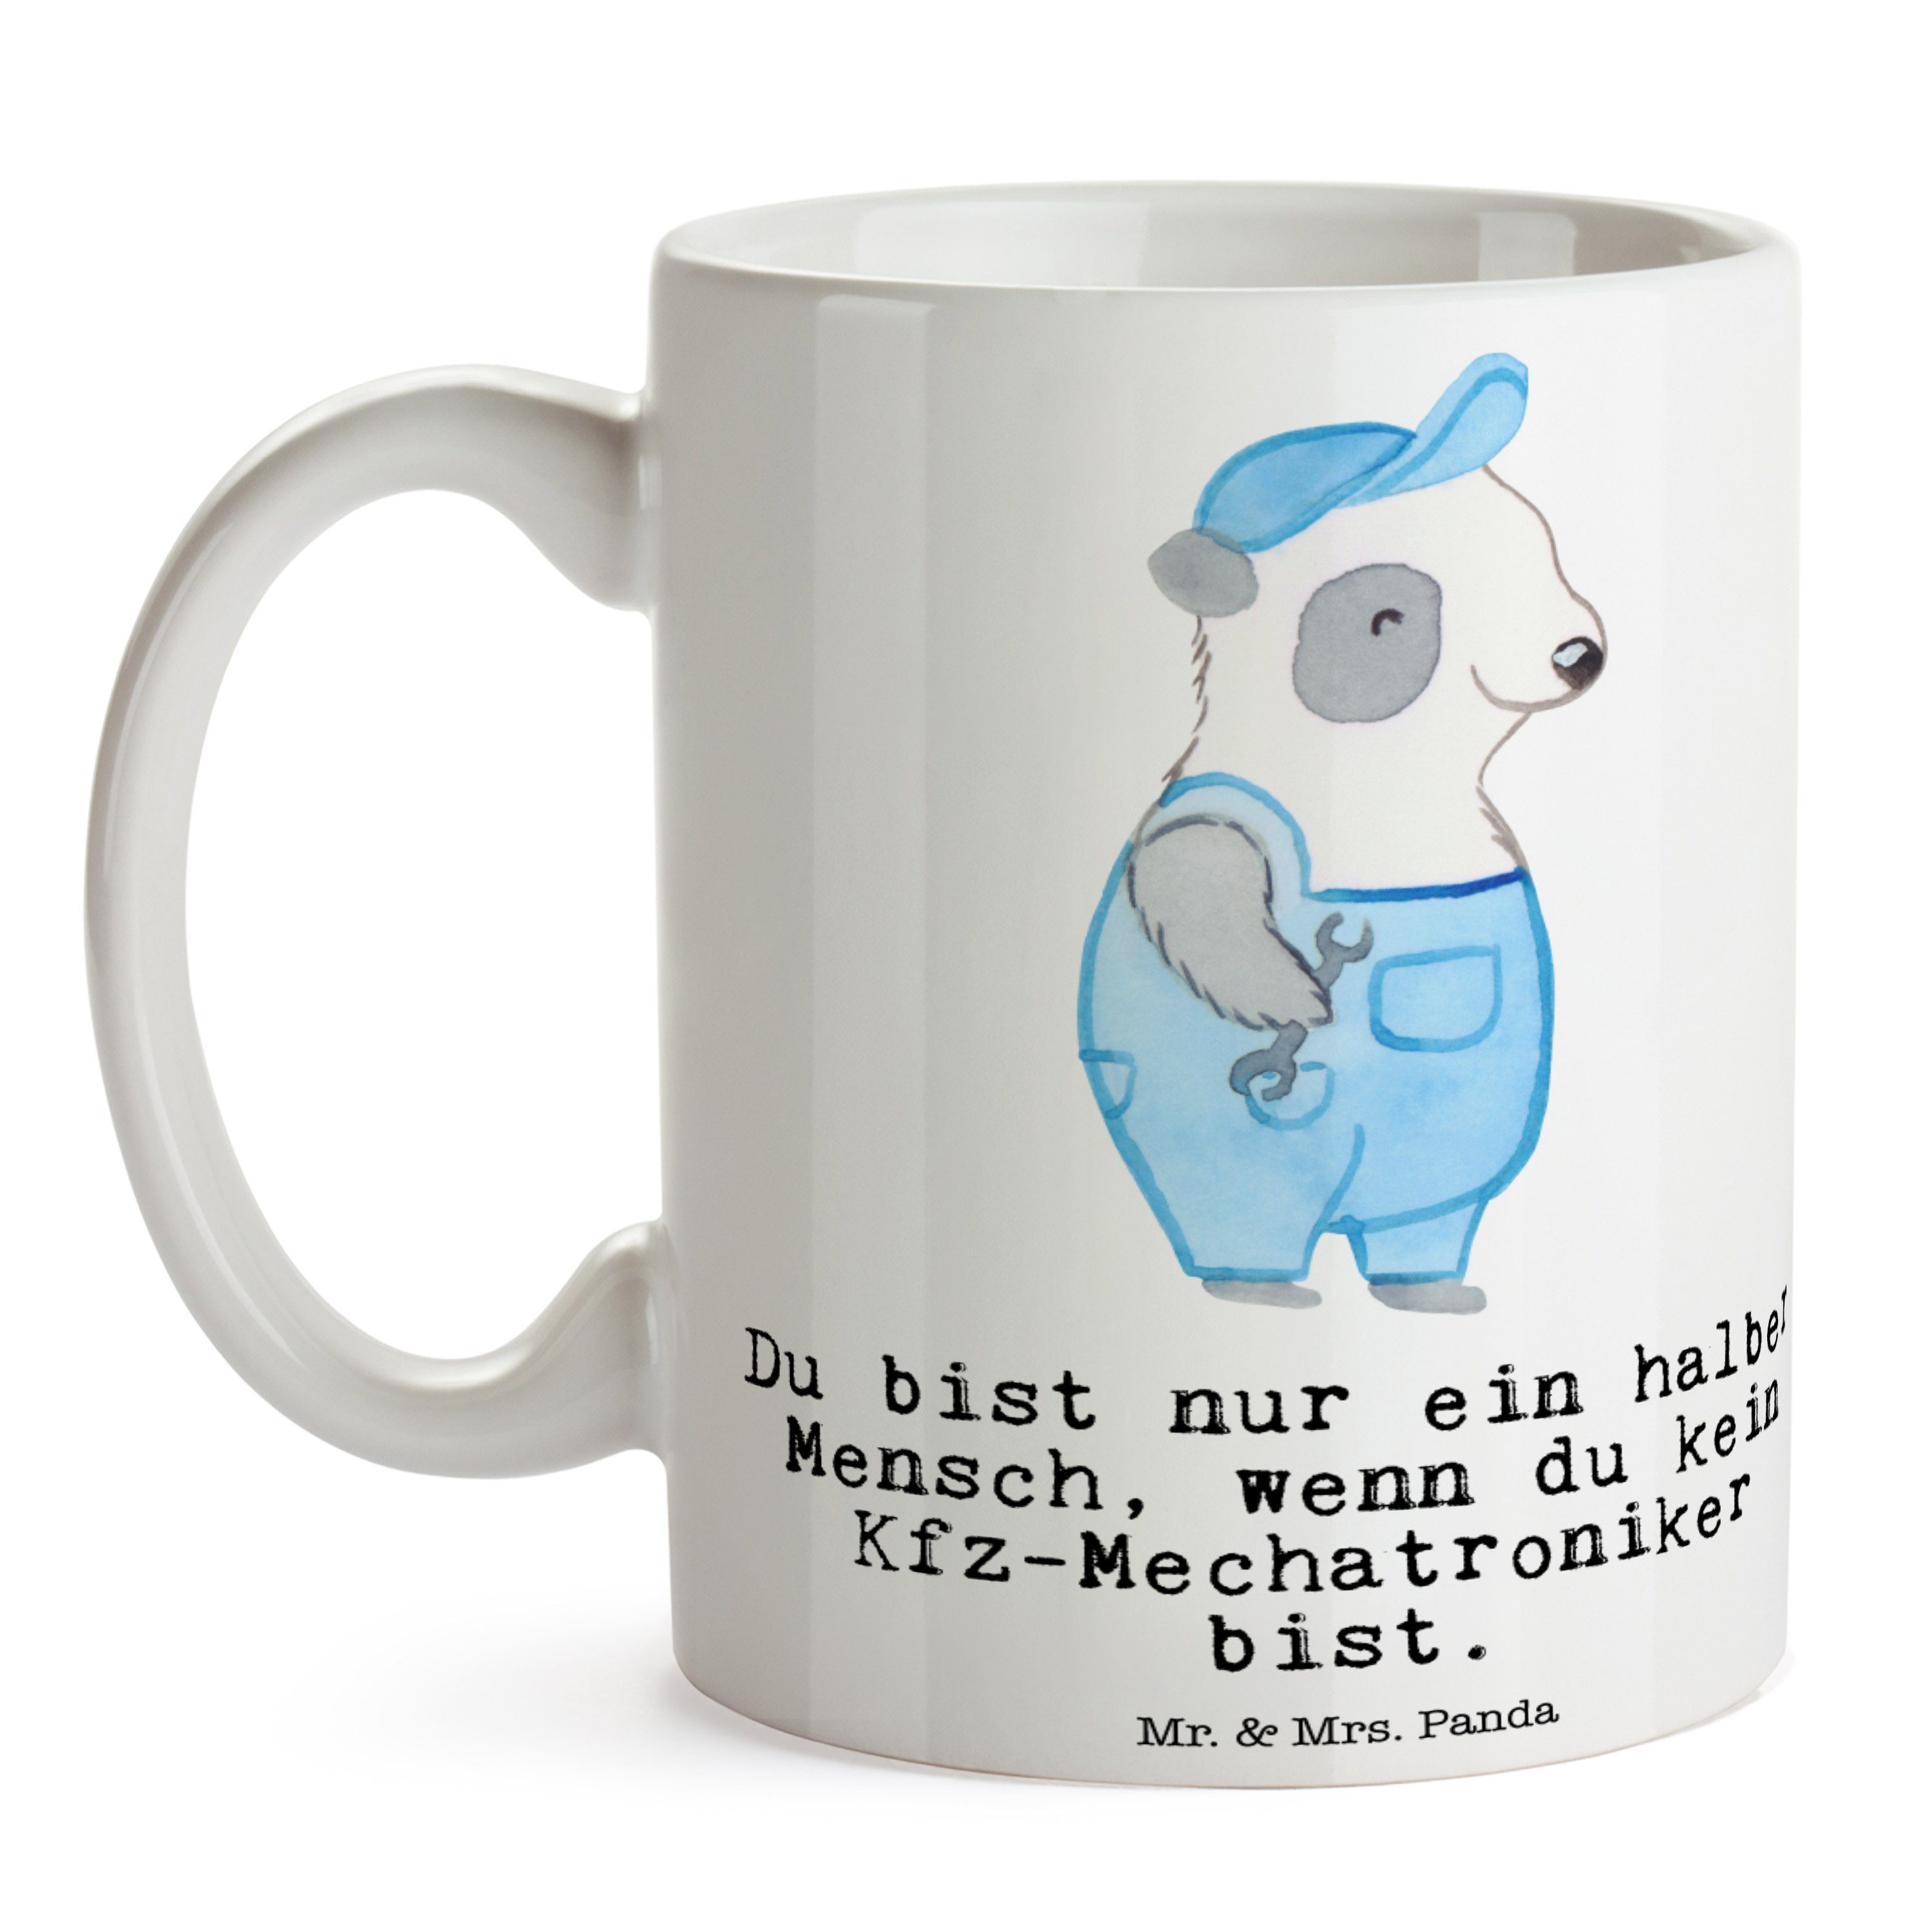 Mr. & Mrs. Panda Kfz-Mechatroniker Geschenk, Herz Gesellenprüfung, Kraftf, - mit Tasse - Keramik Weiß